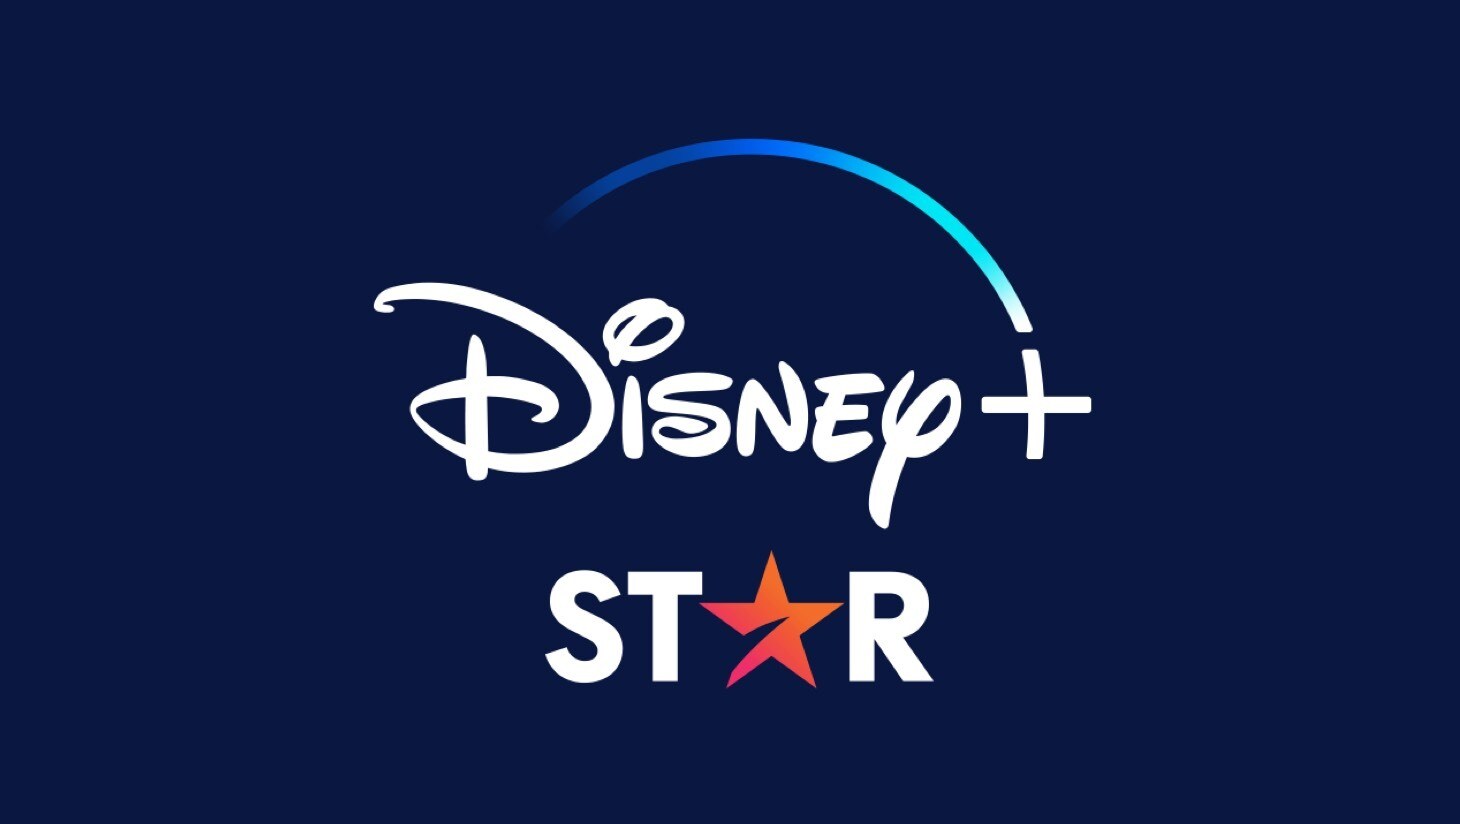 Disney+ introducing Star | Disney UK